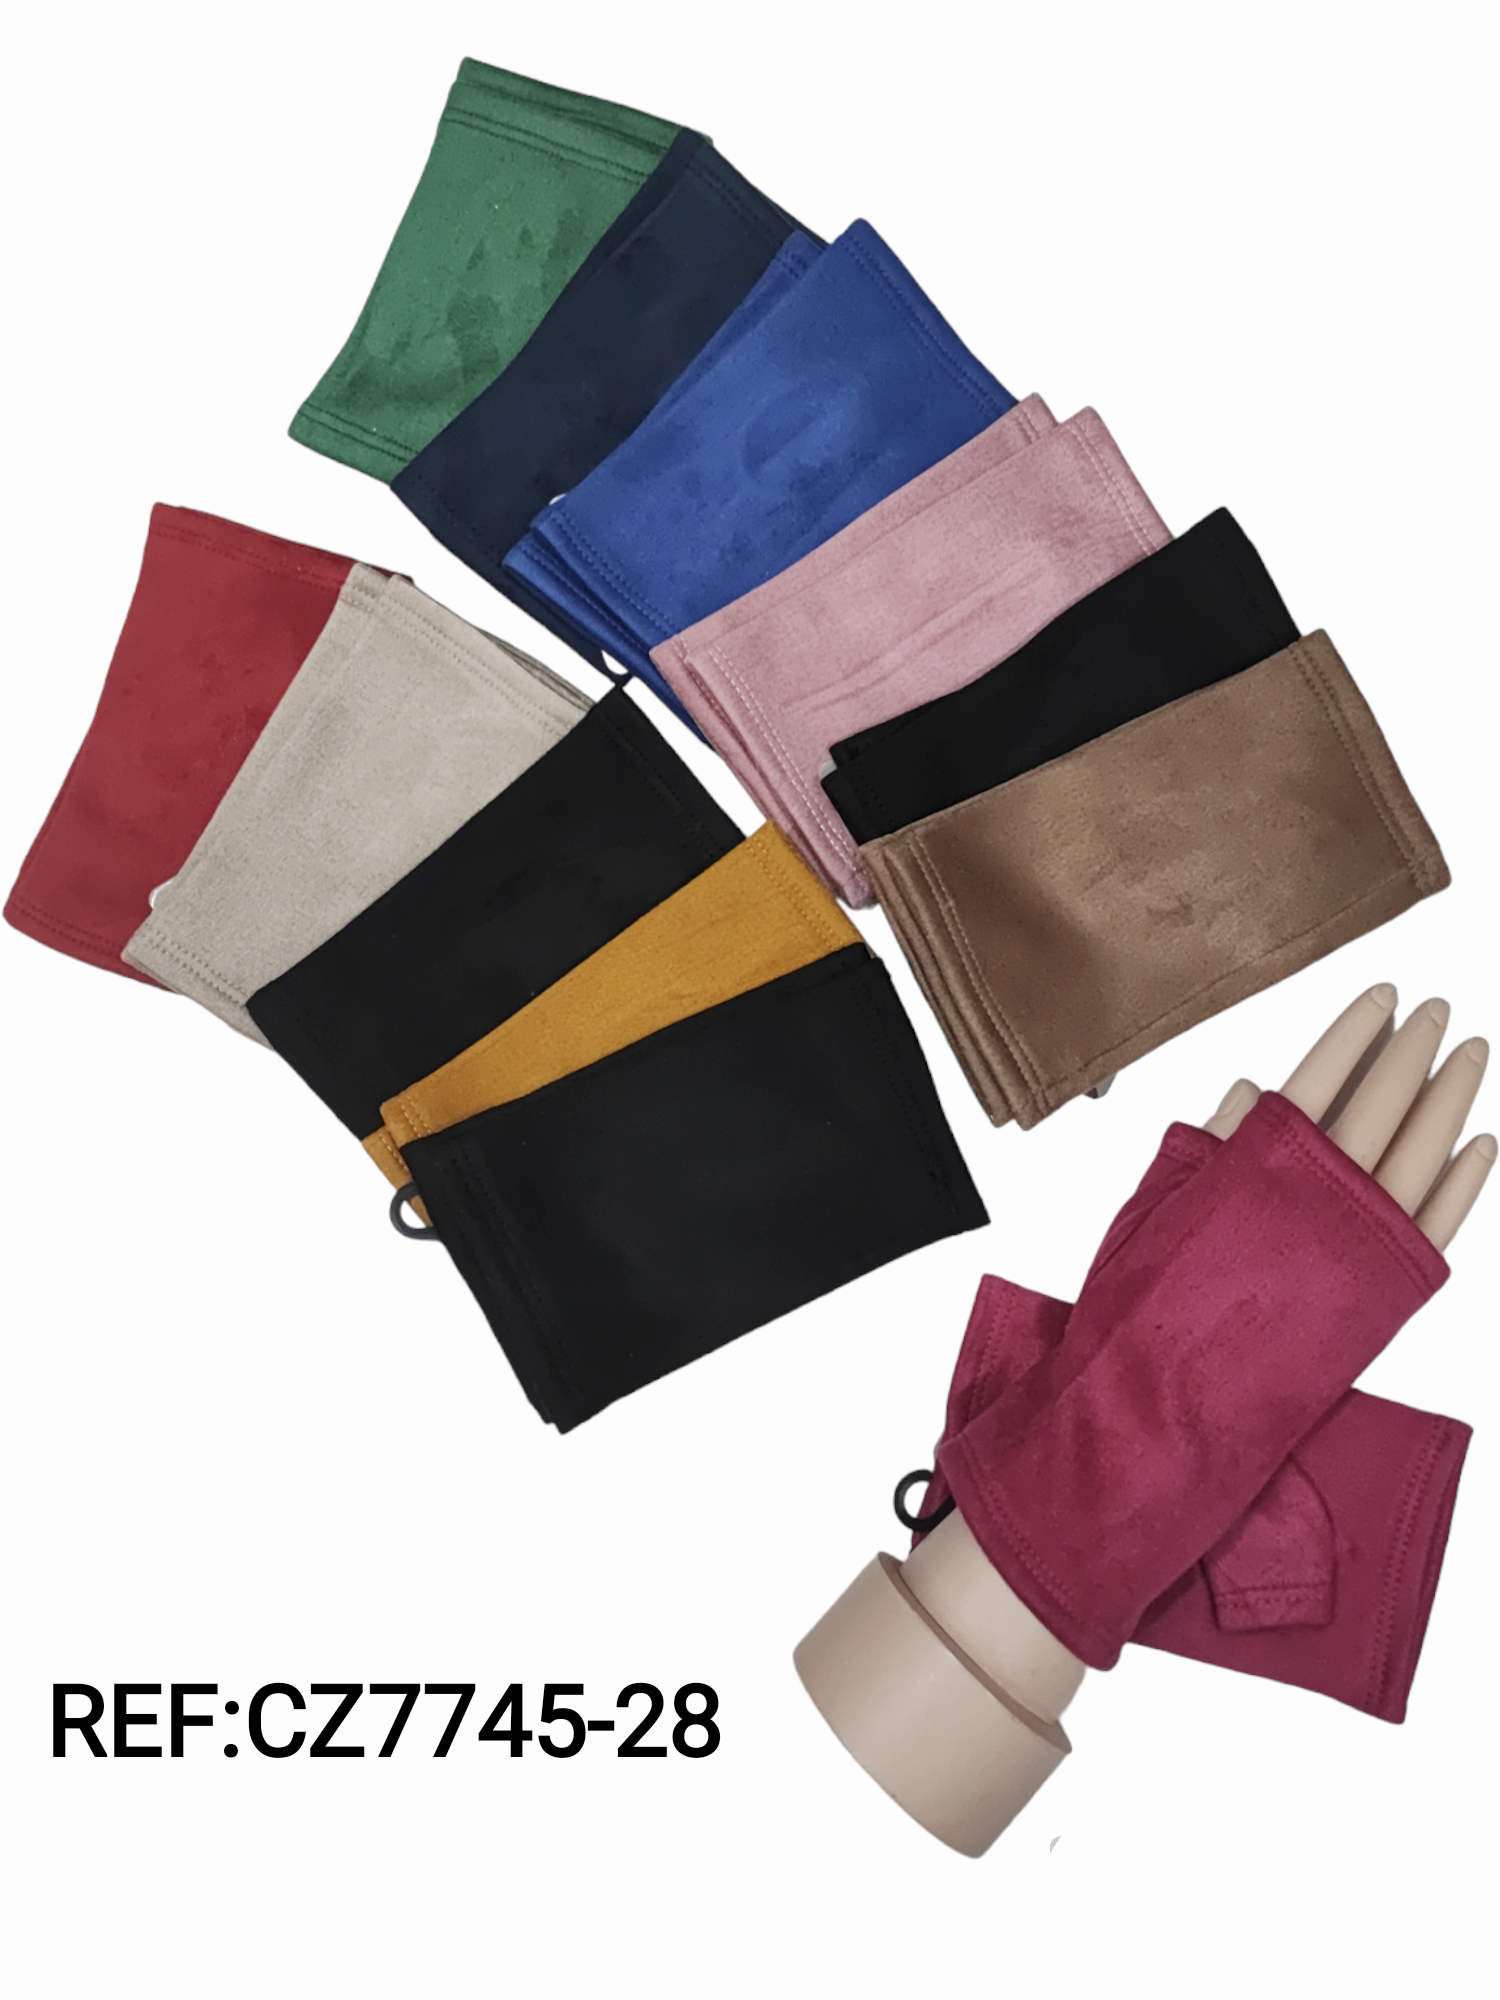 Mitaines gants femme Simple (x12)#28